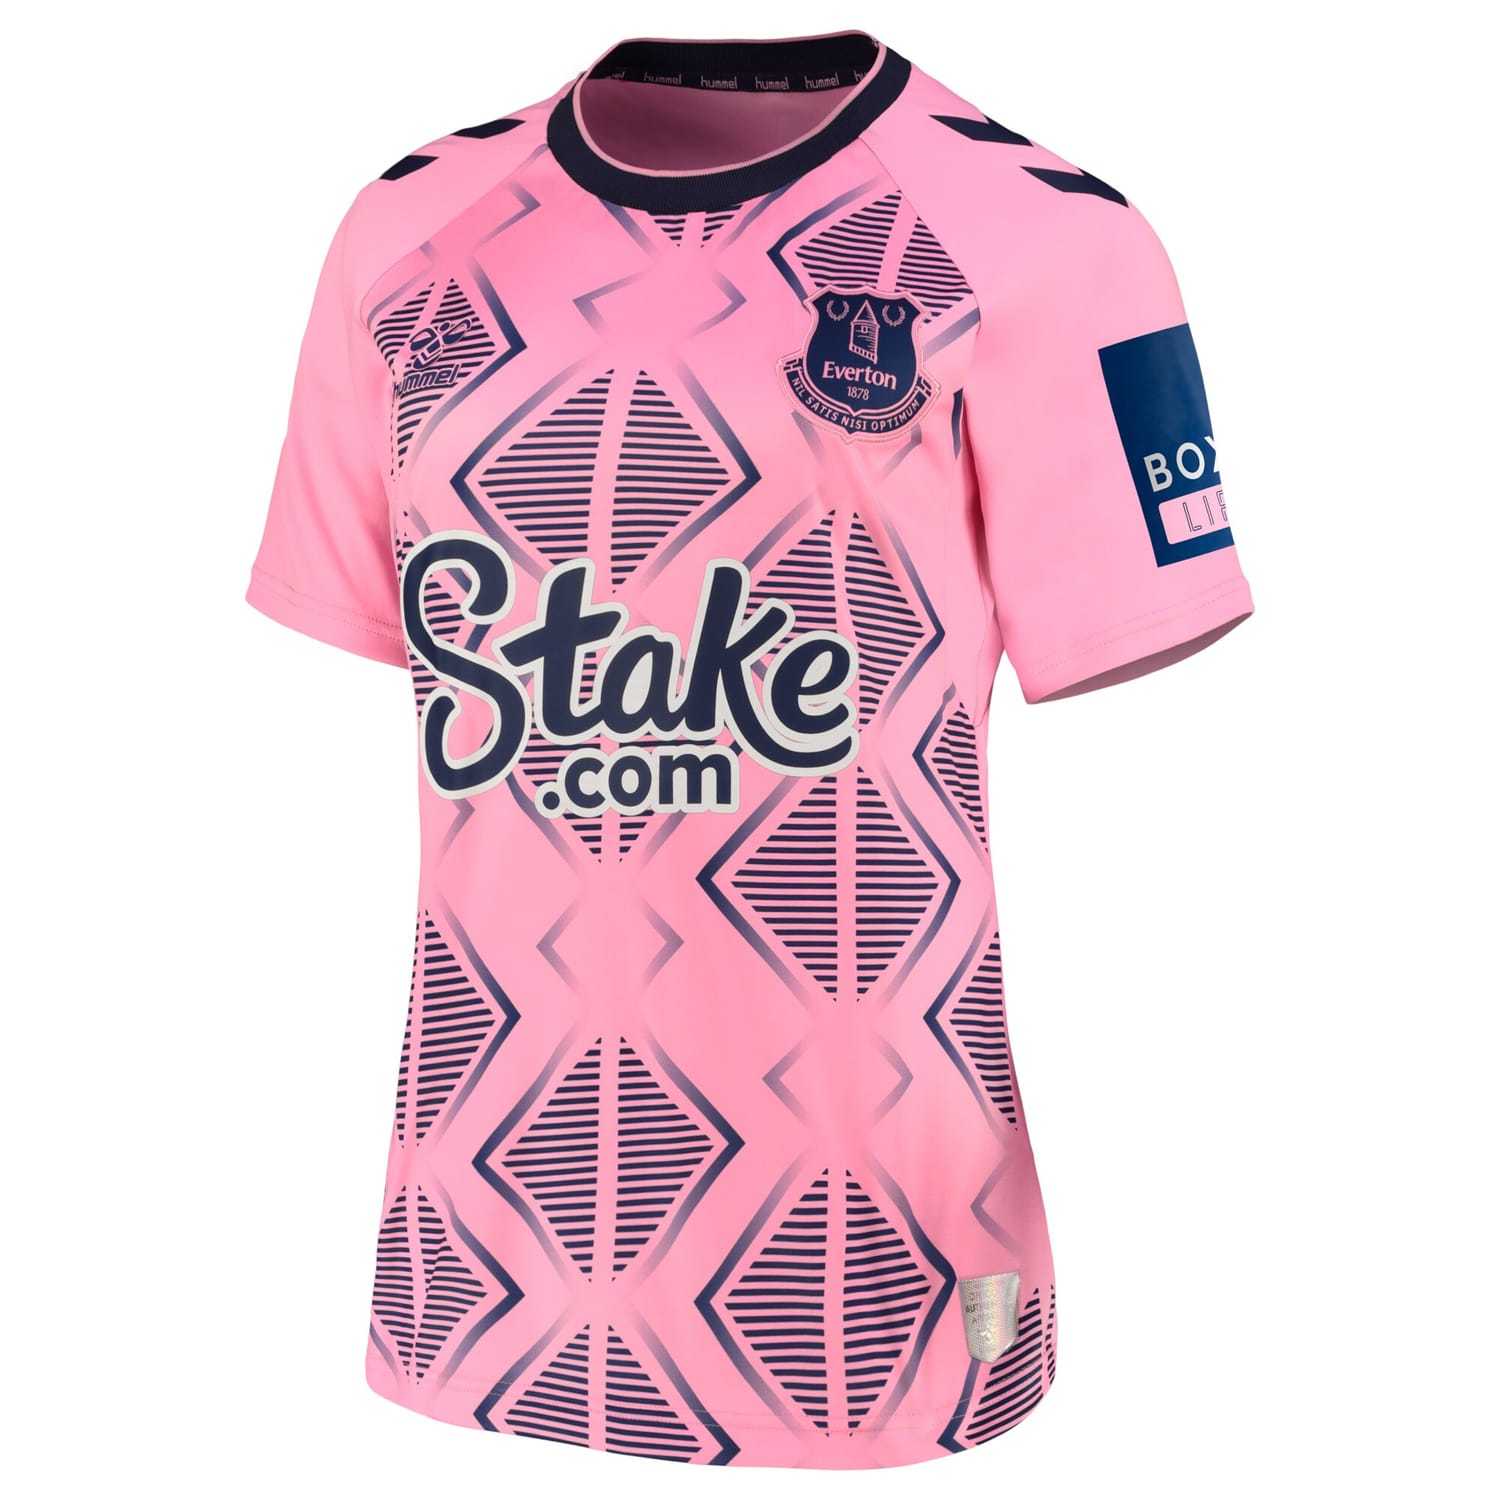 Premier League Everton Away Jersey Shirt 2022-23 player Rikke Sevecke 4 printing for Women